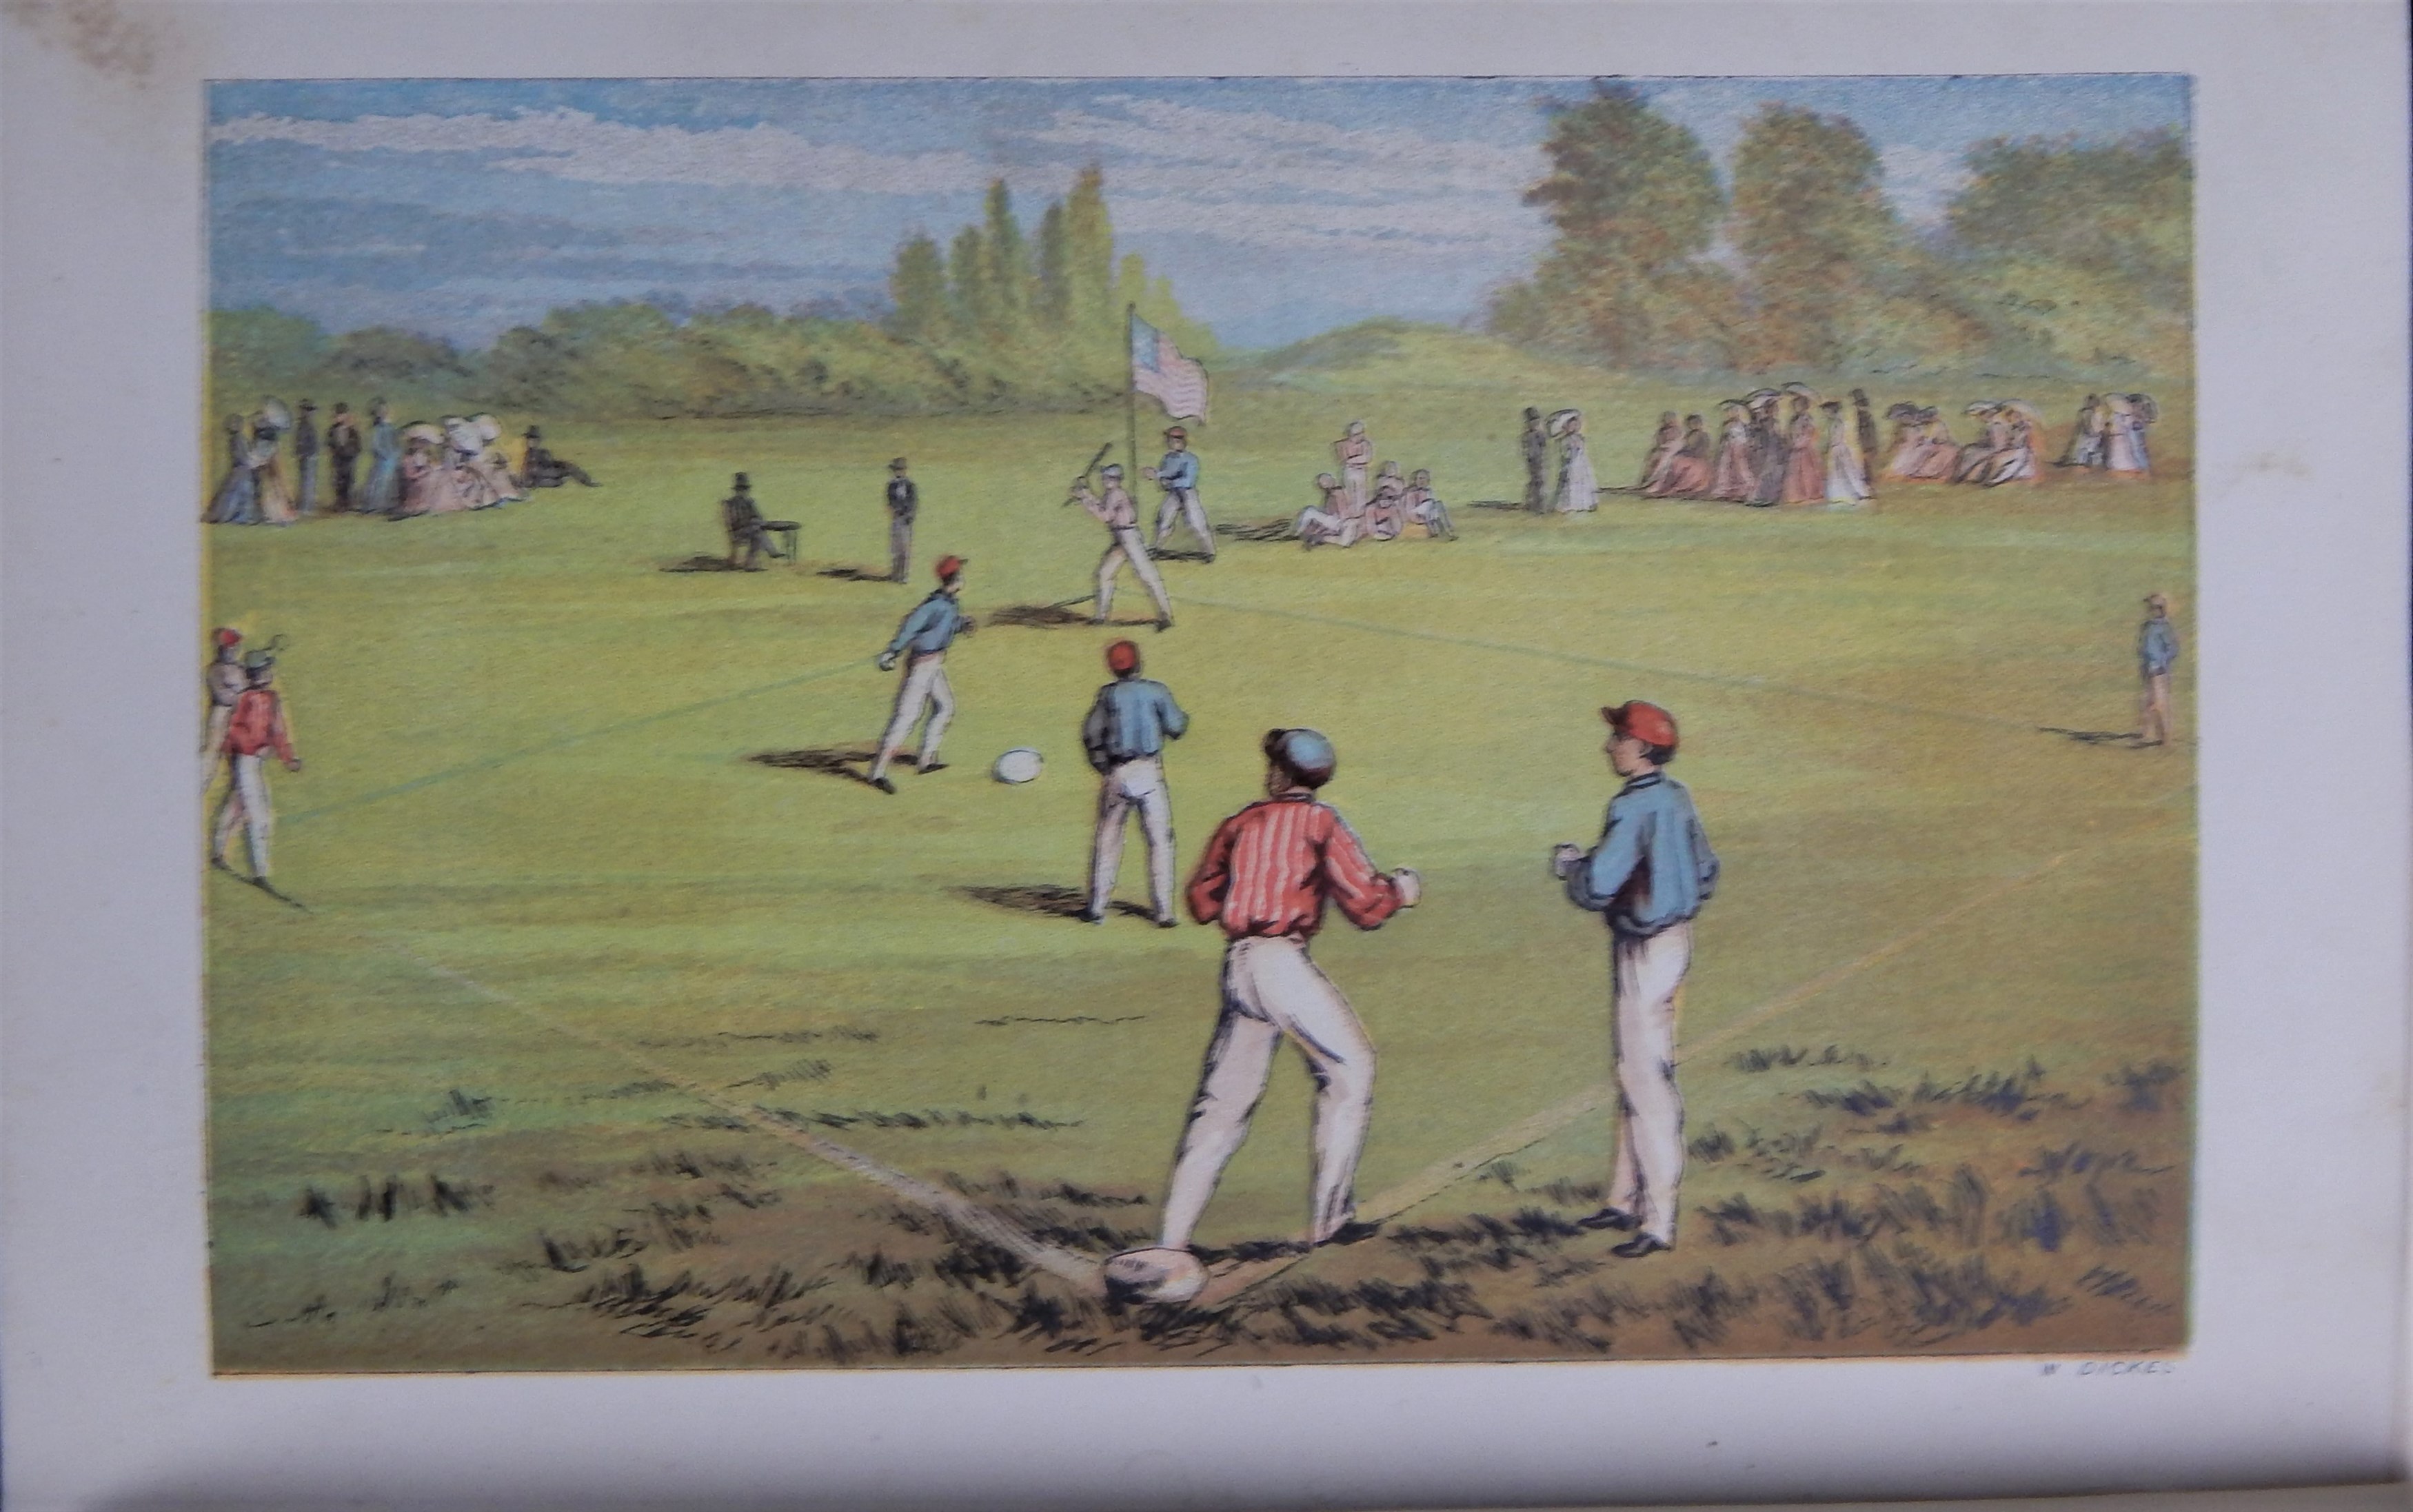 - Important Early Baseball Book (1864)